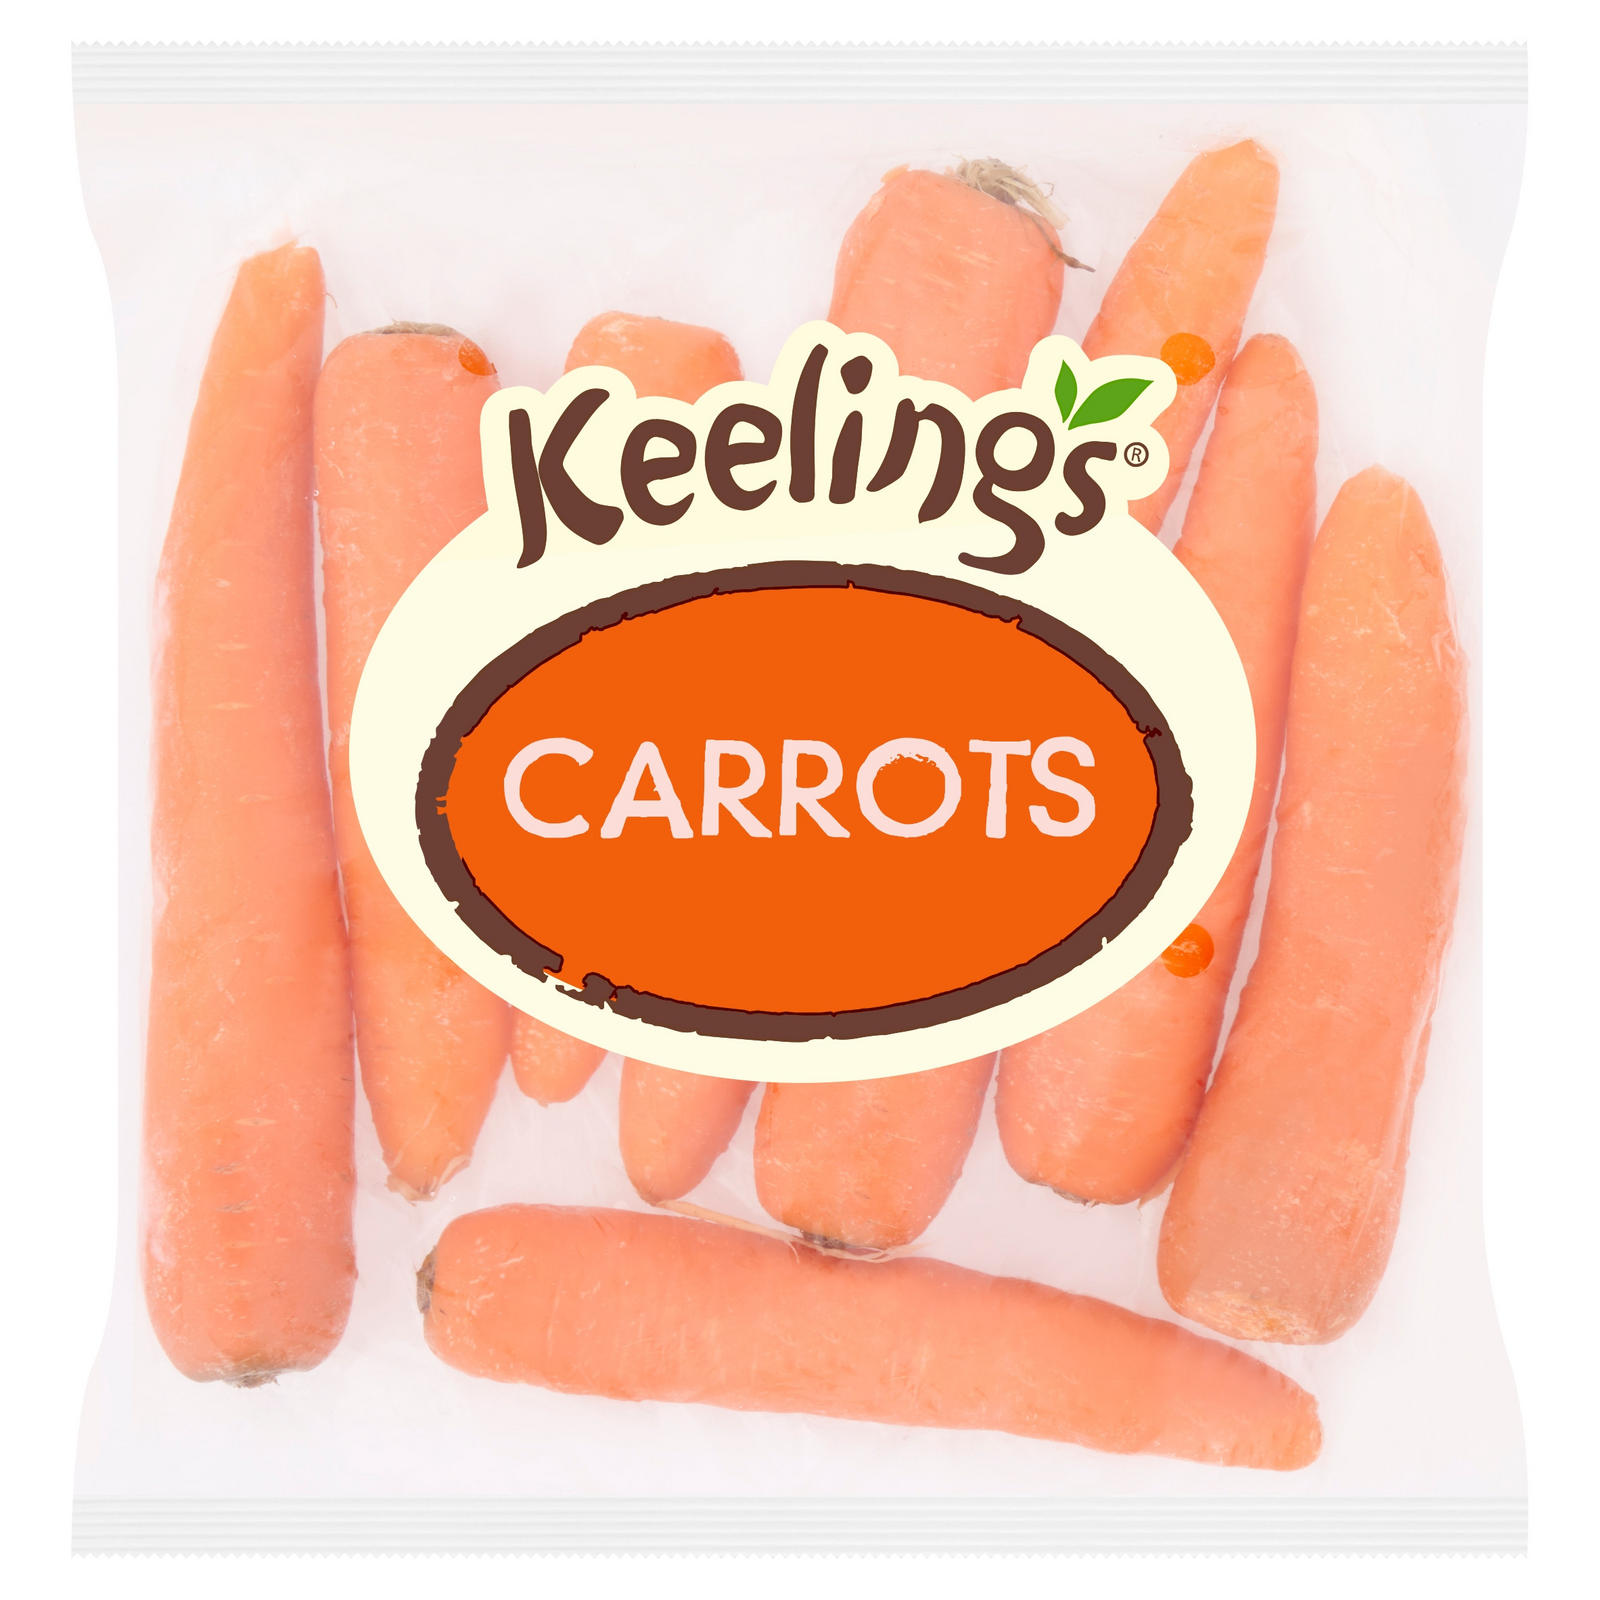 Keelings Carrots 1kg